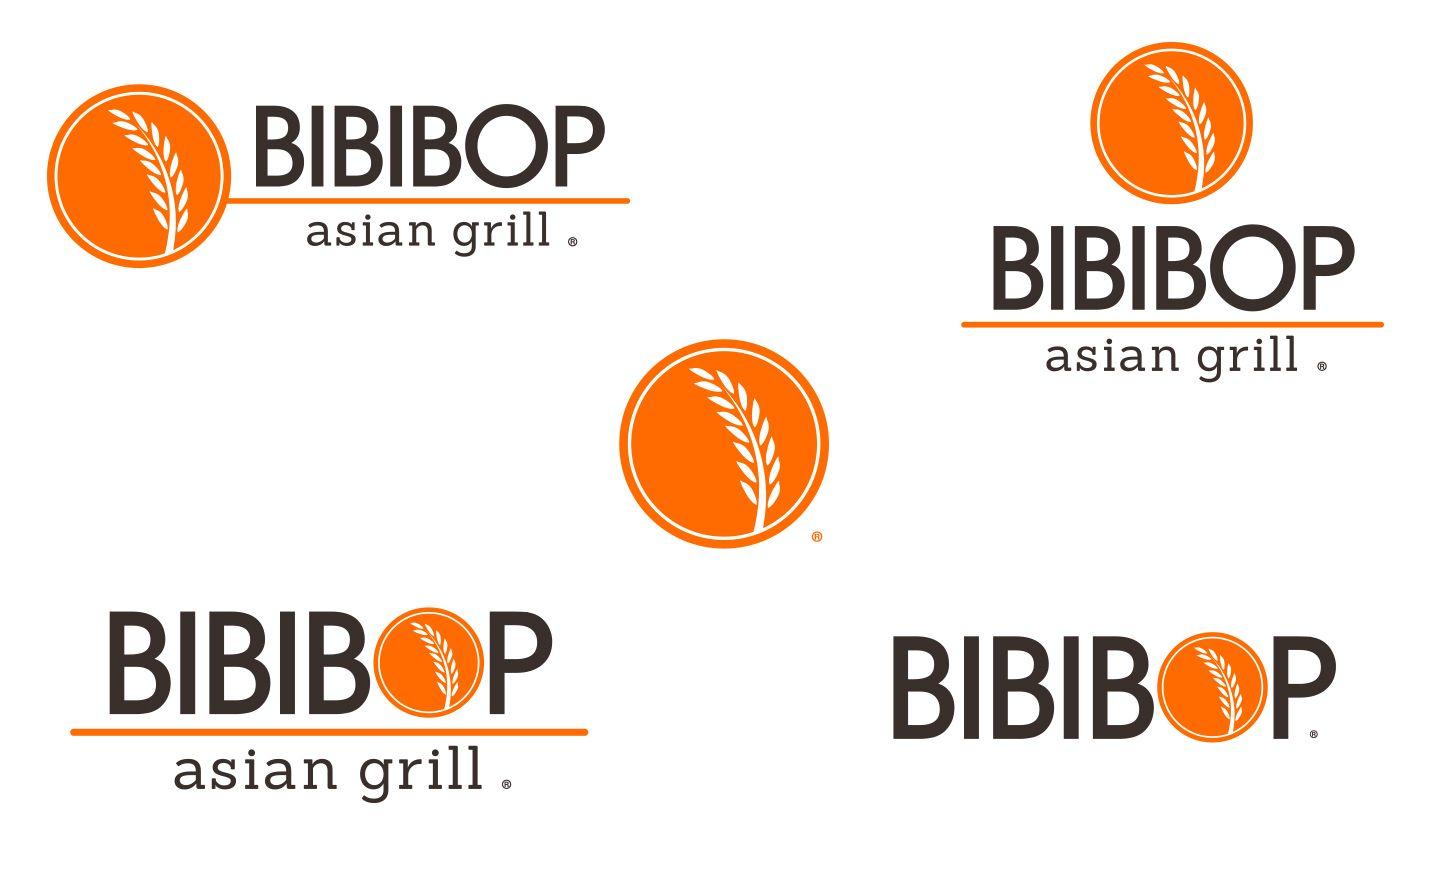 Bibibop Logo - Bibibop Asian Grill. Cody Holland Creative